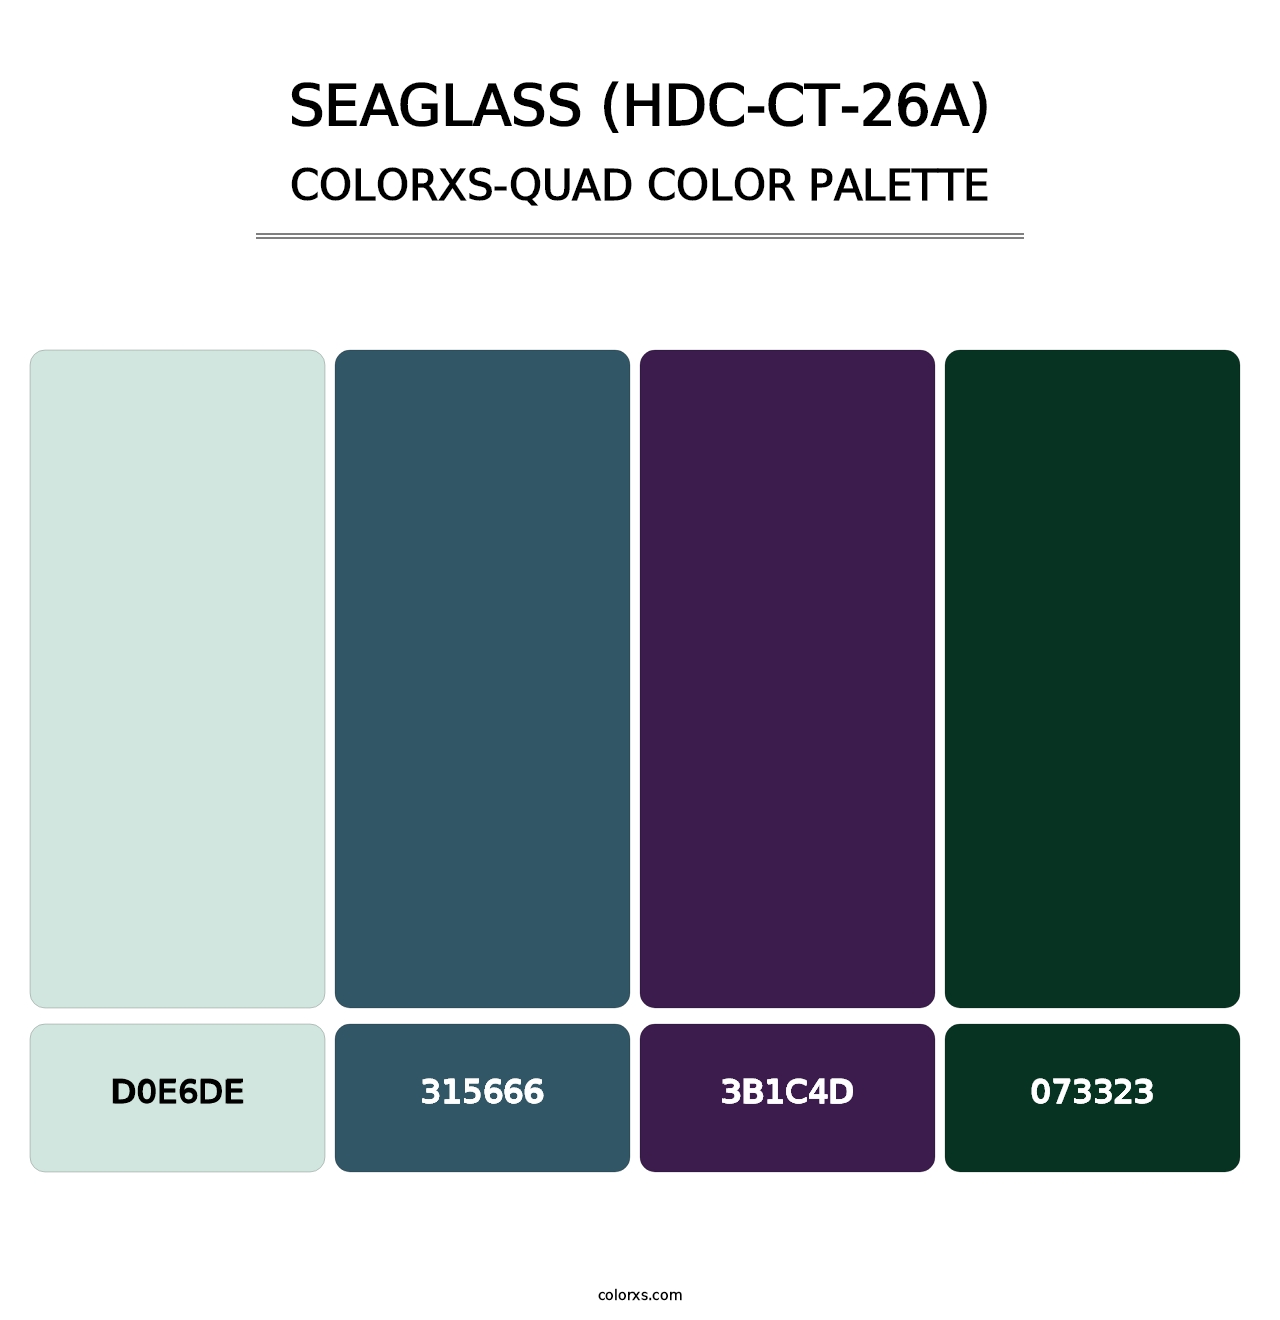 Seaglass (HDC-CT-26A) - Colorxs Quad Palette